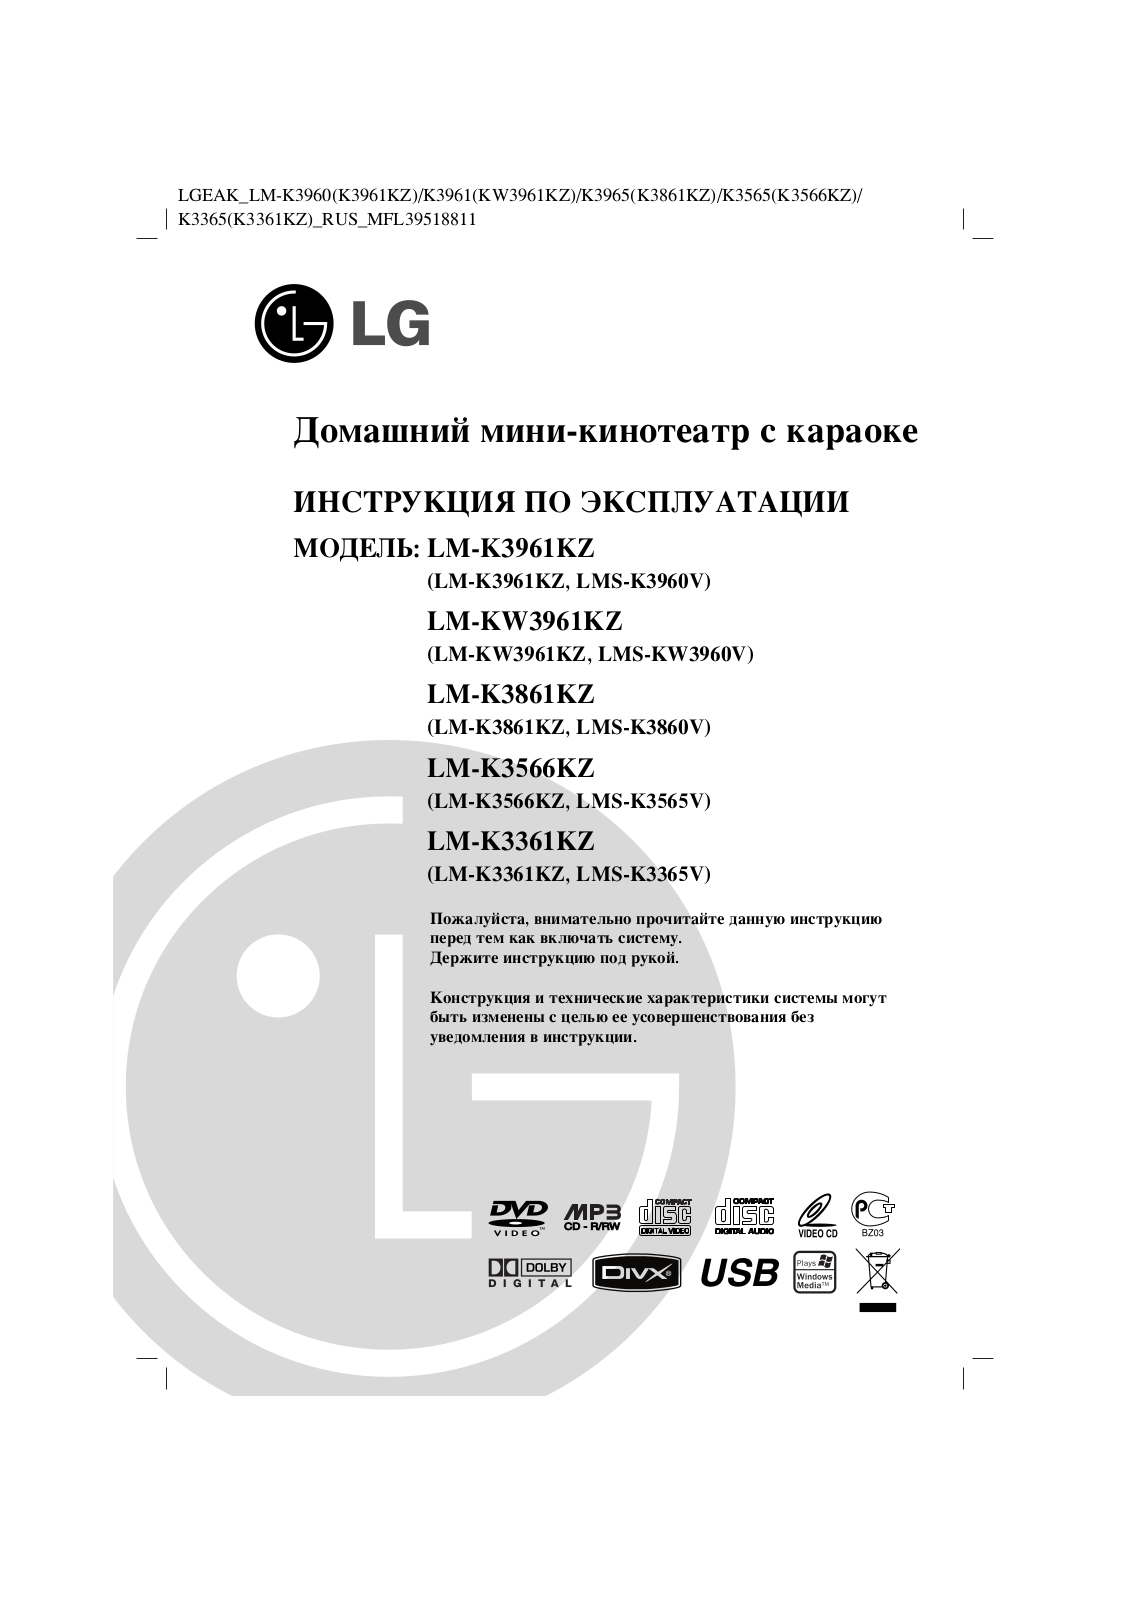 LG LM-KW3961KZ User Manual